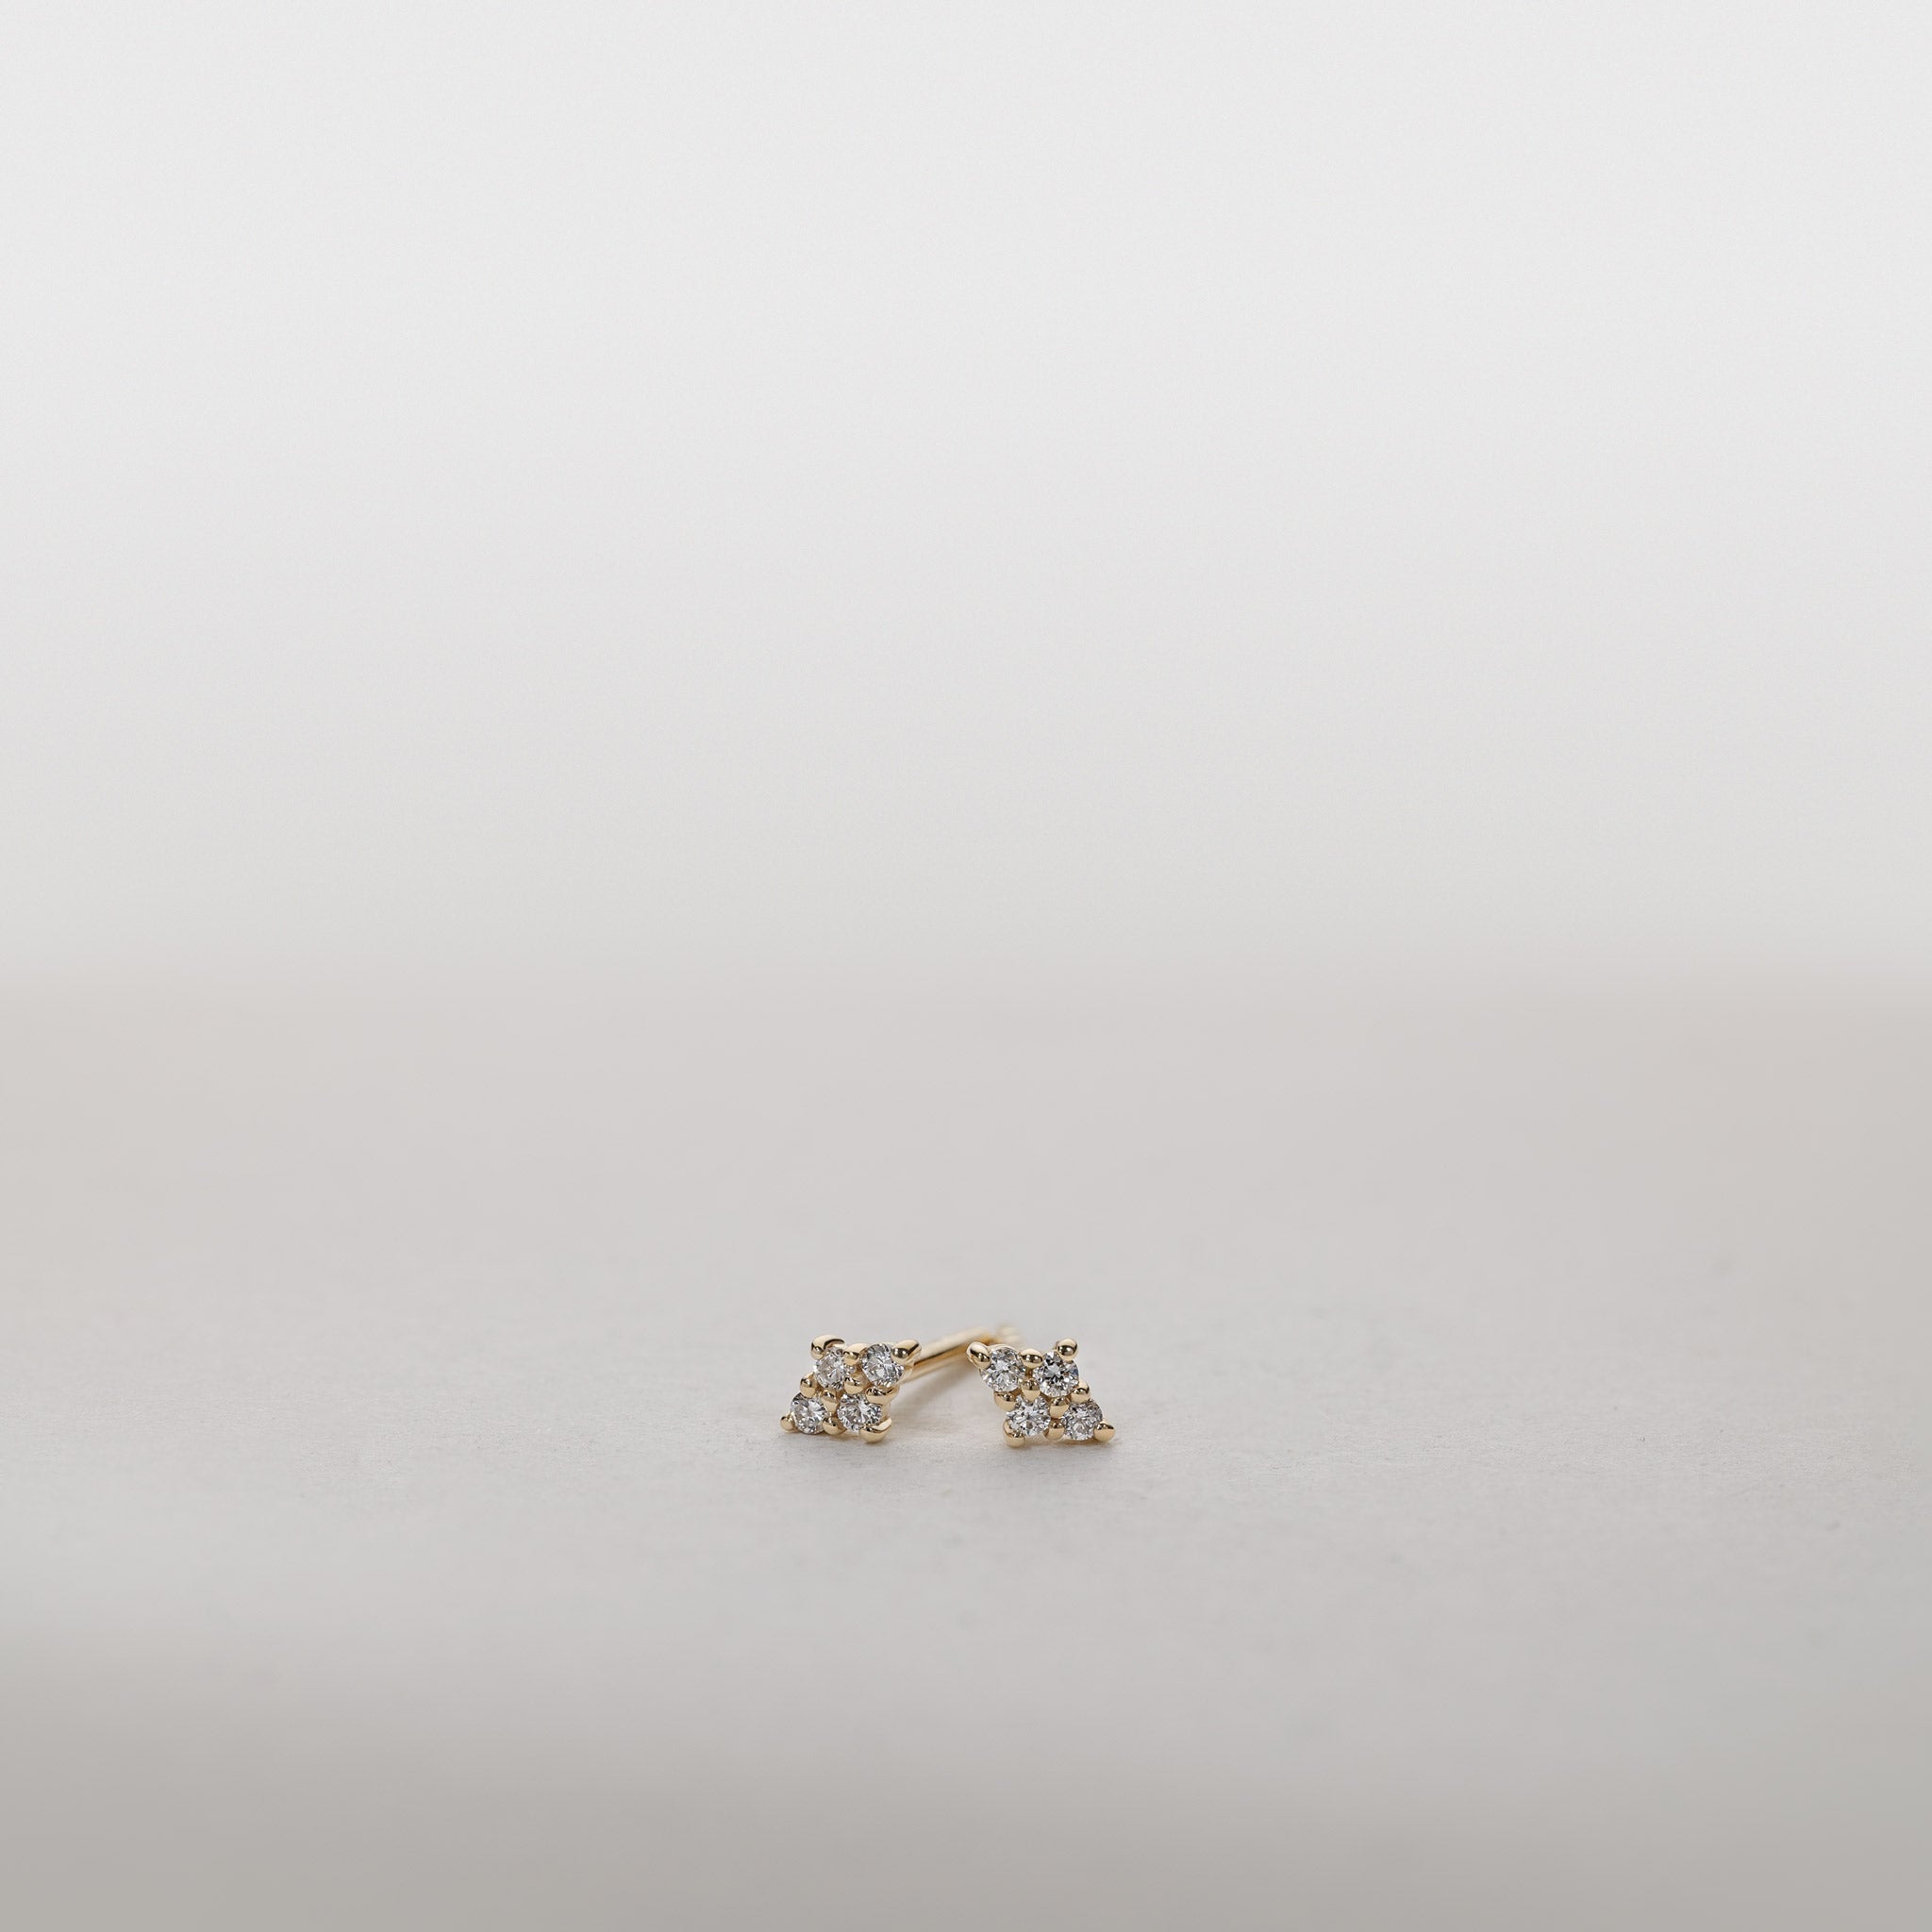 0.10 Carats Diamond Harlequin Stud Earrings 14K Gold Jocelyn